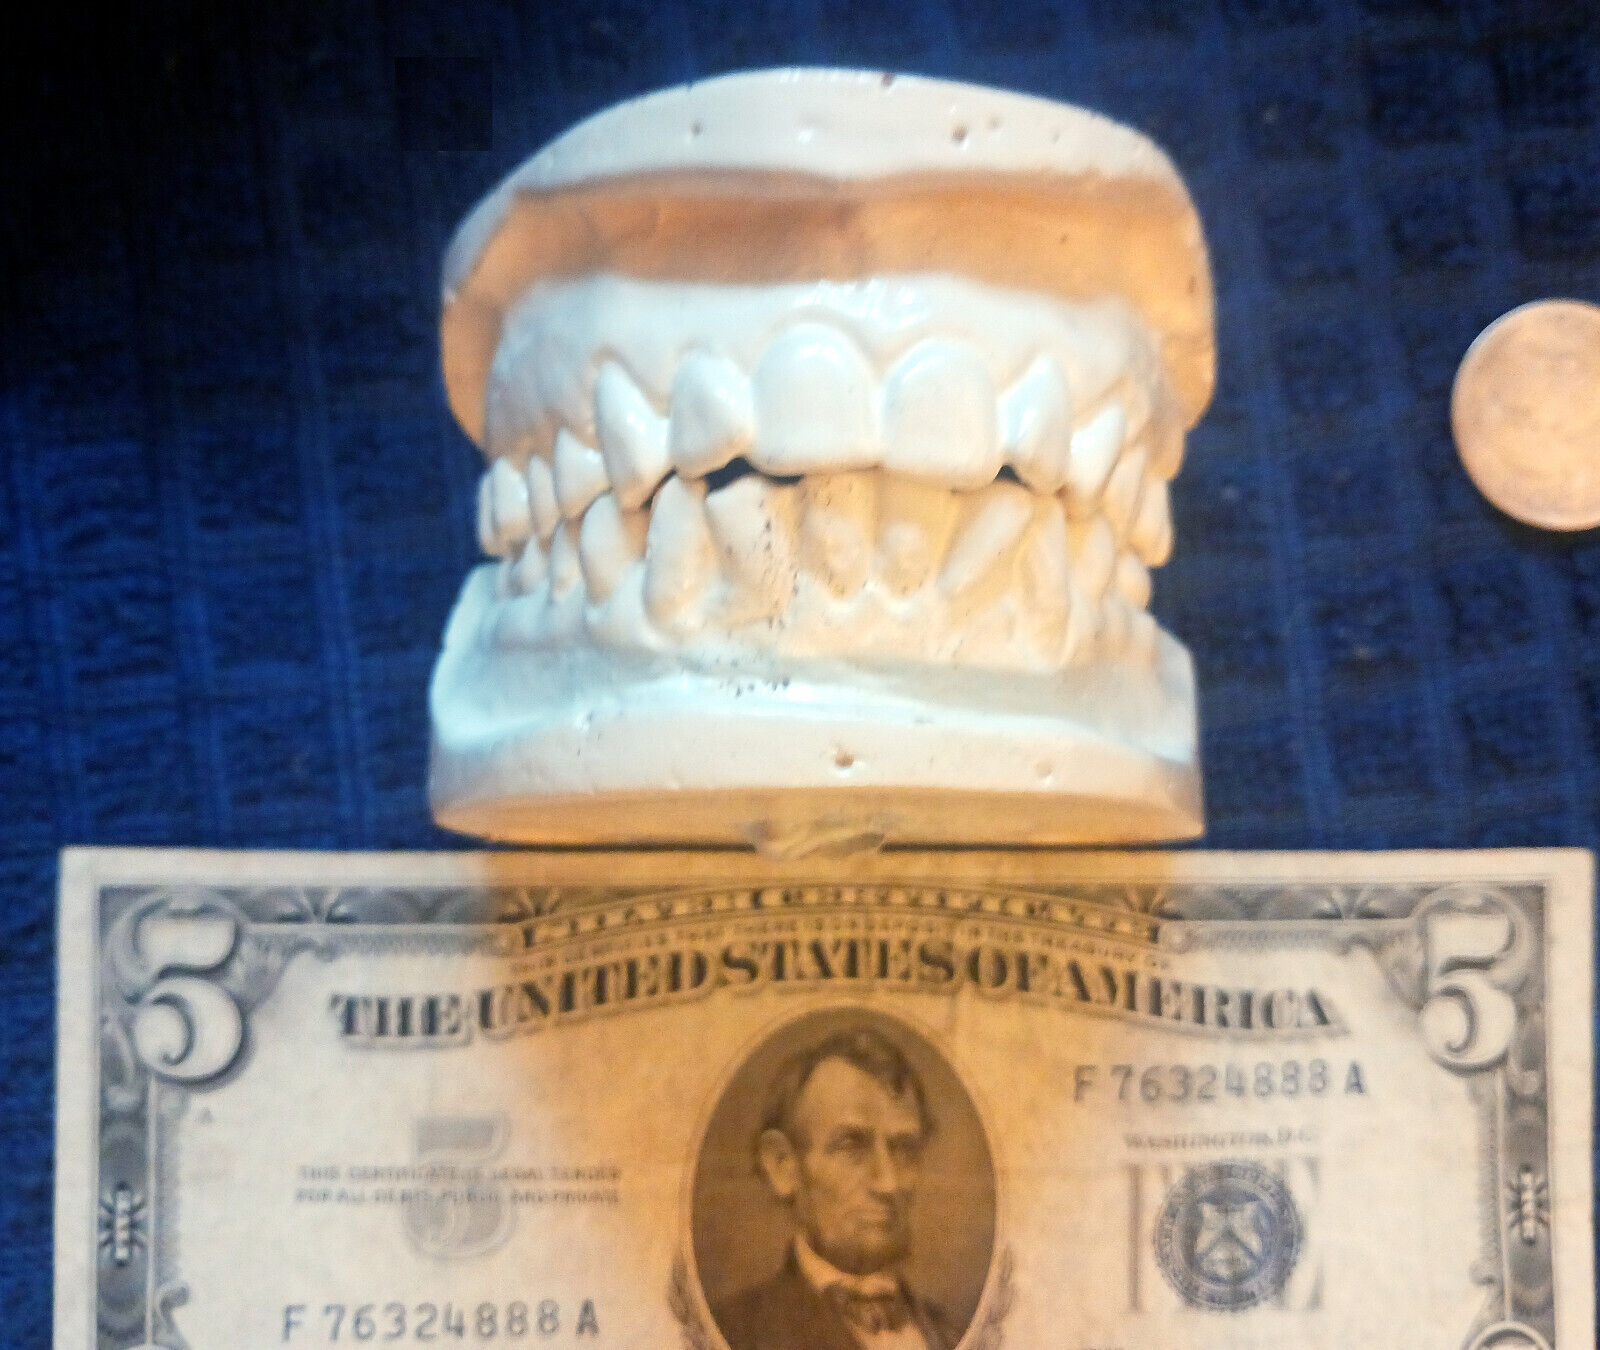 RARE Vintage Genuine HUMAN Tooth Upper & Lower Anatomical Dental Mold Casting